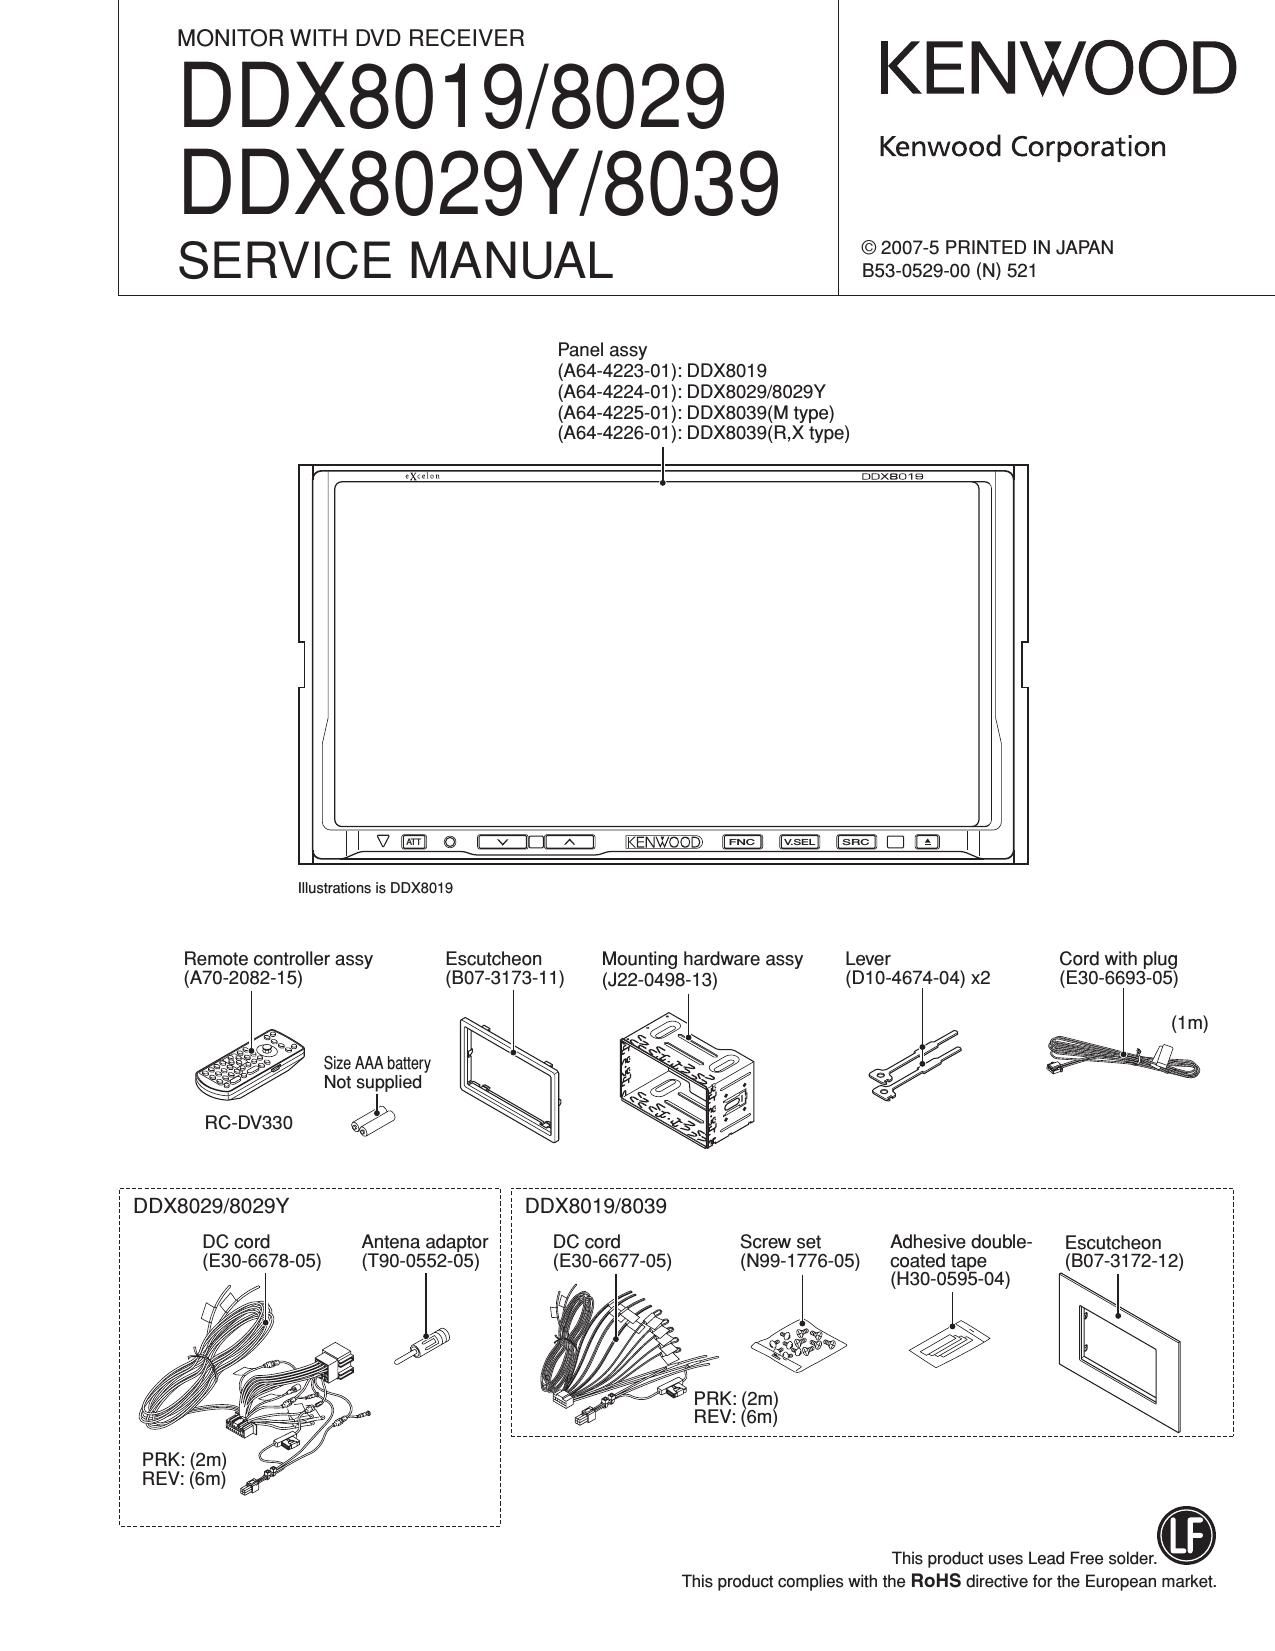 Kenwood DDX 8039 Service Manual